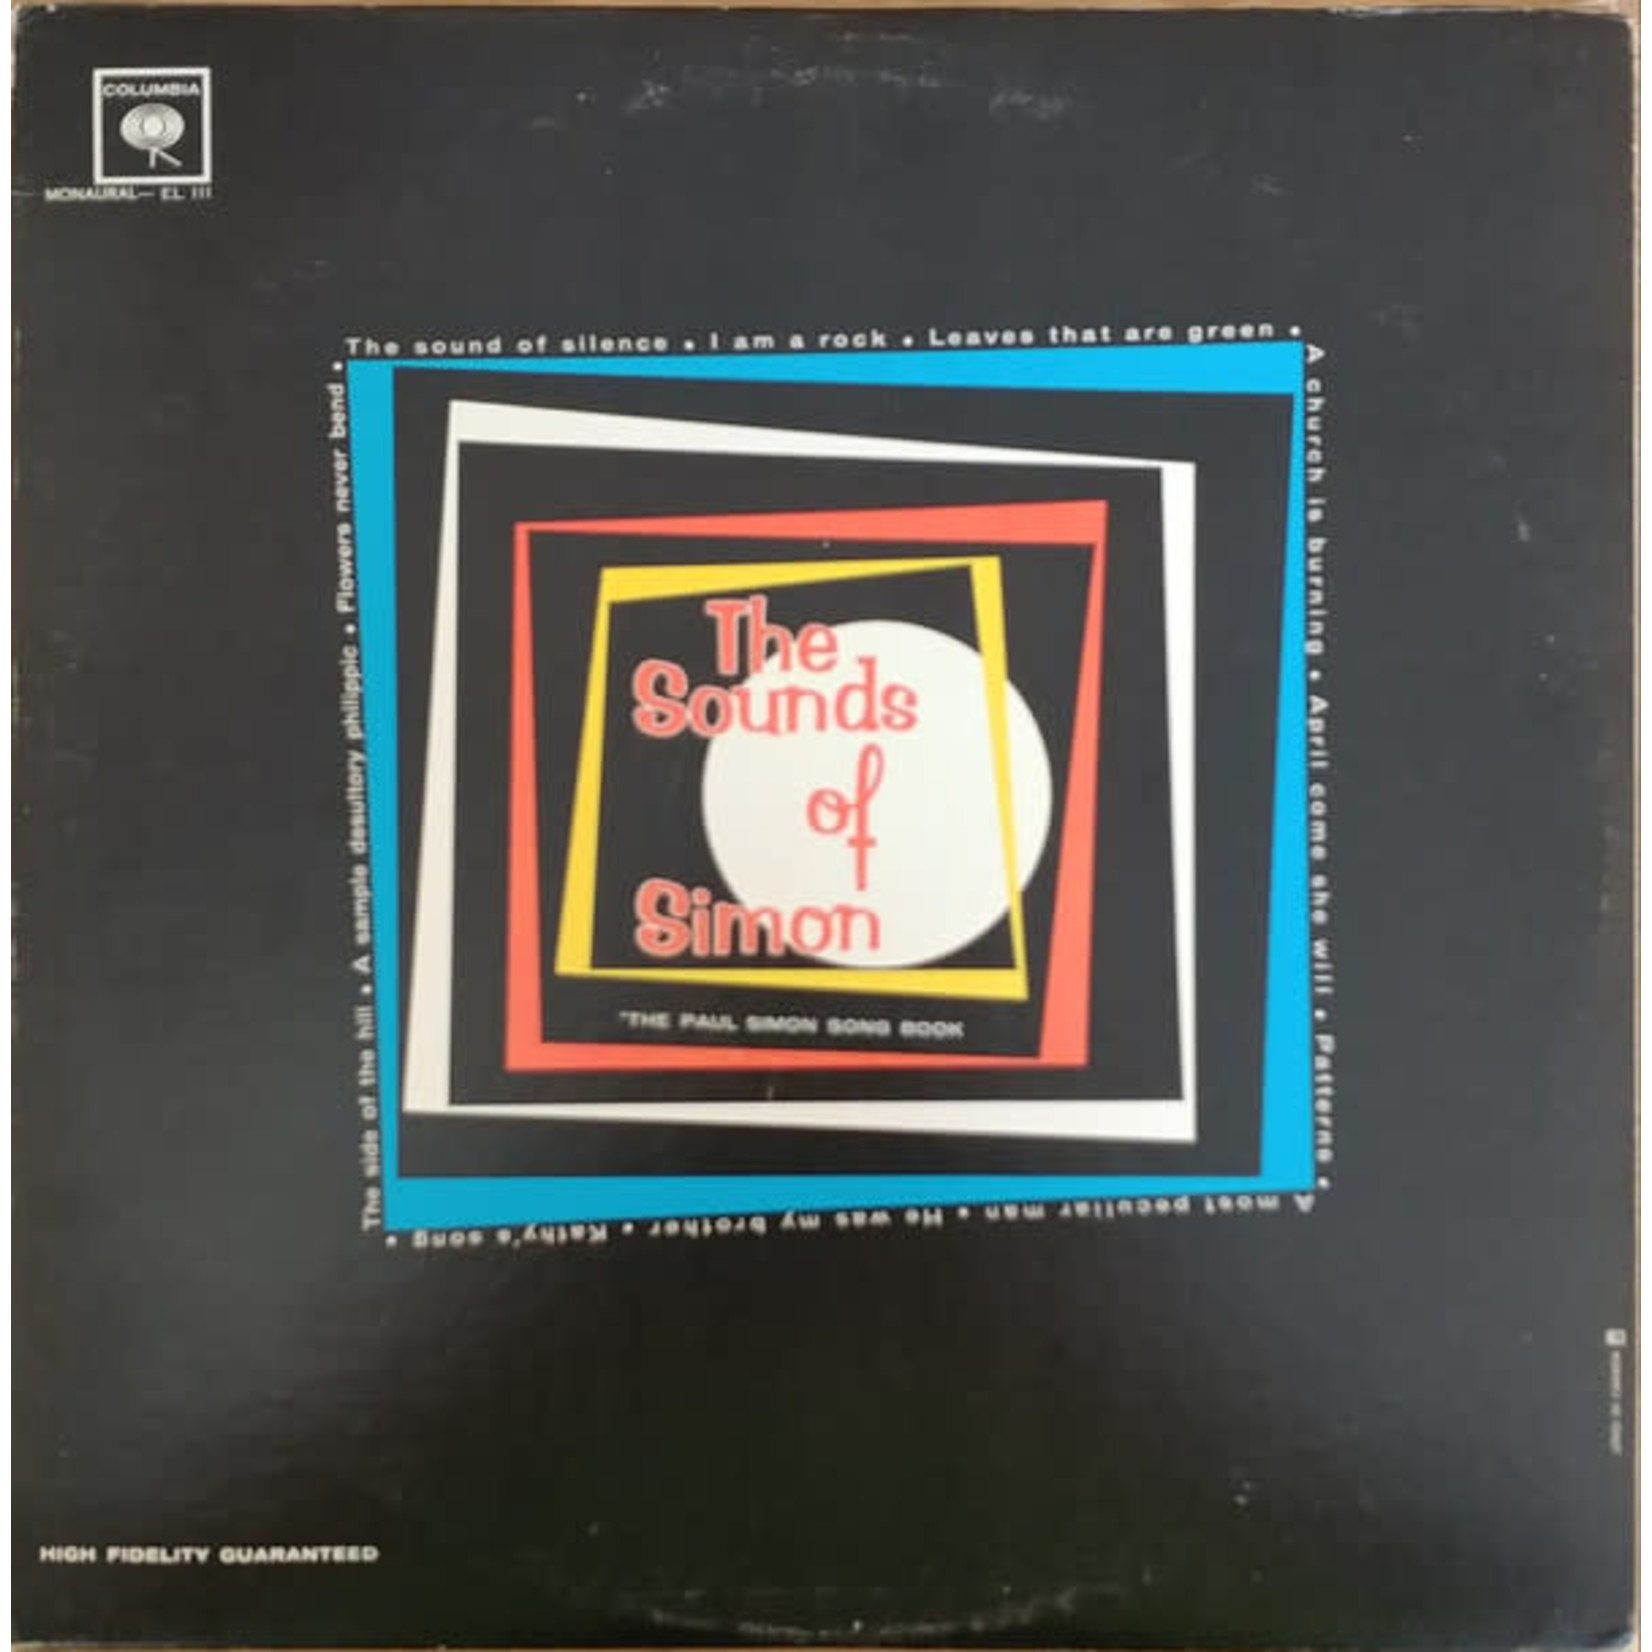 Paul Simon Paul Simon – The Sounds Of Simon (The Paul Simon Song Book) (G, LP, Columbia, EL 111, Canada)